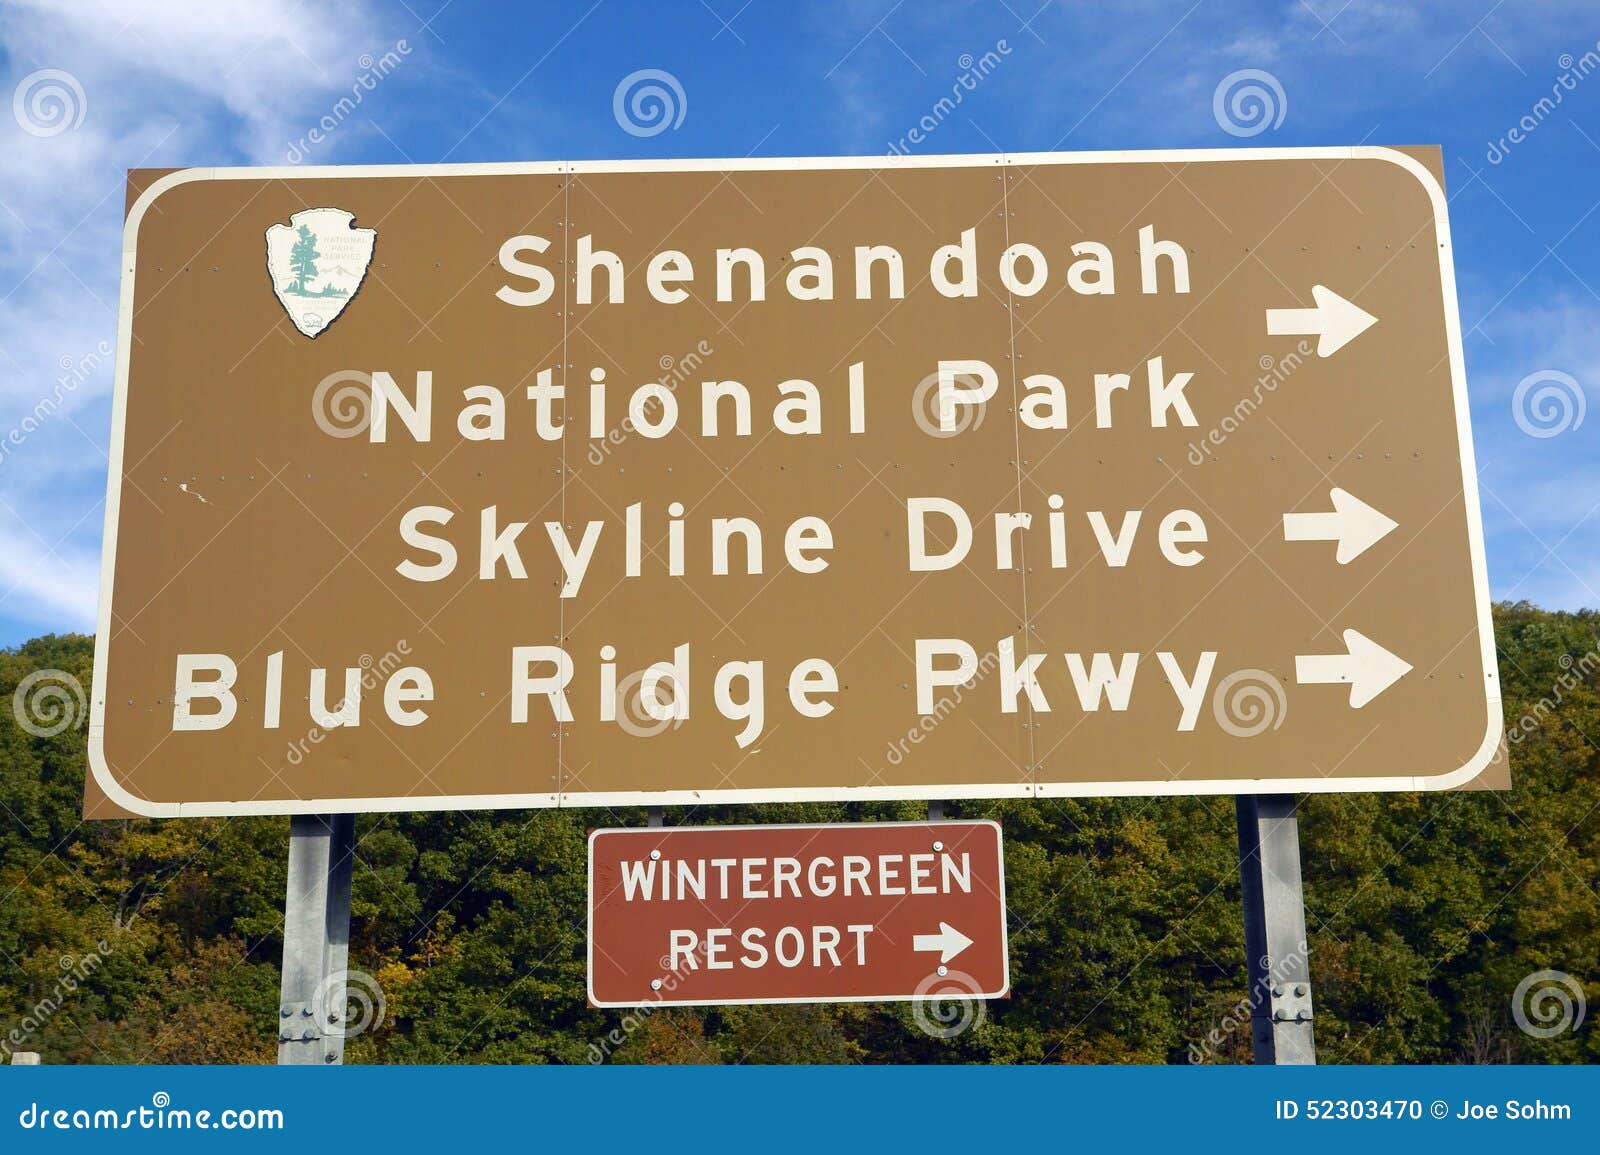 shenandoah national park sign pointing to skyline drive virginia